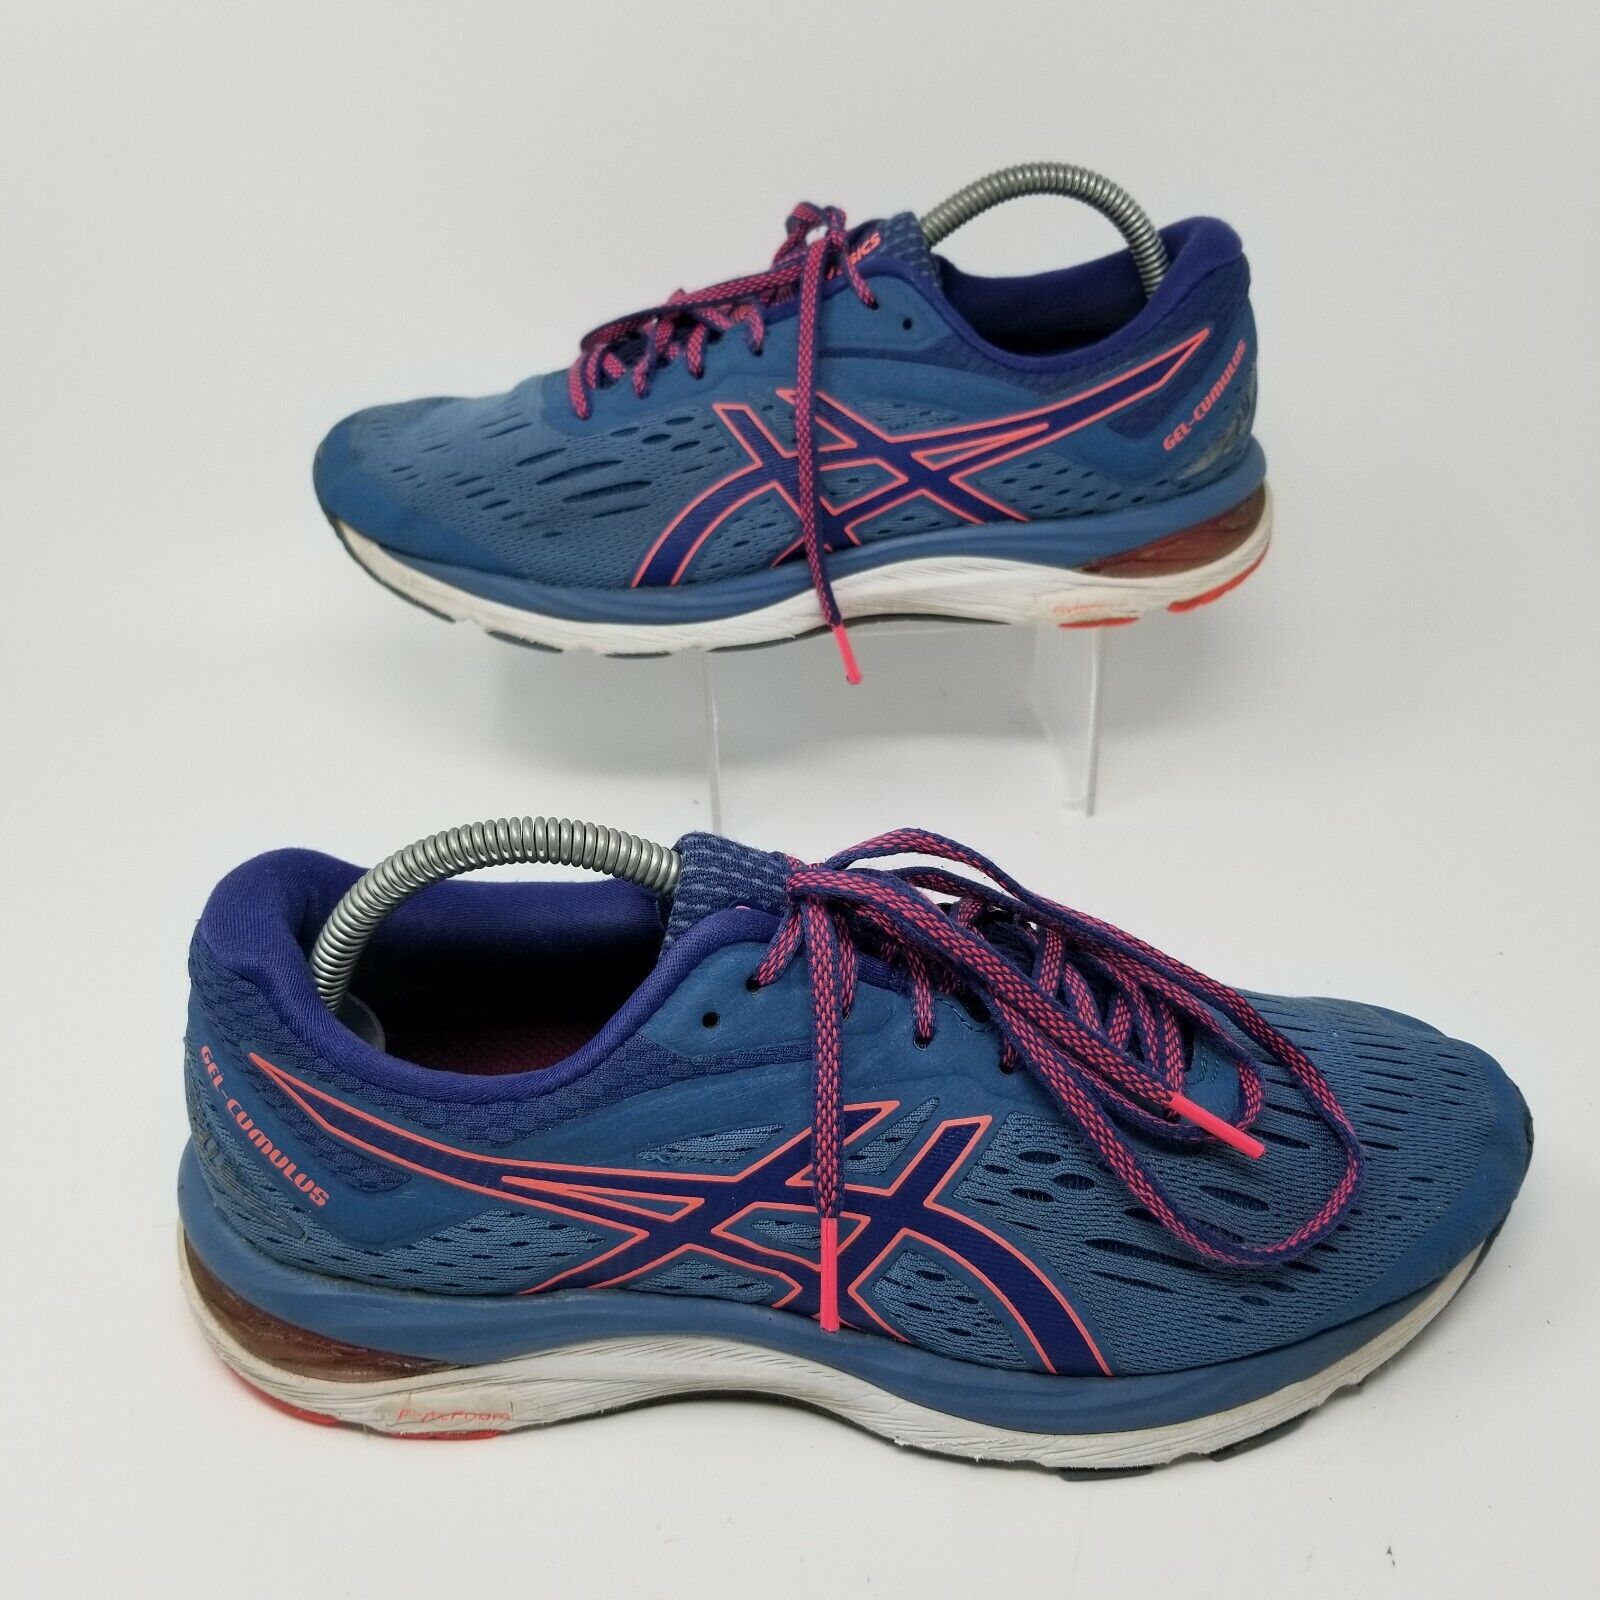 Asics Gel Cumulus 20 Blue Athletic Running Tennis Shoes Sneaker Women Size 10.5